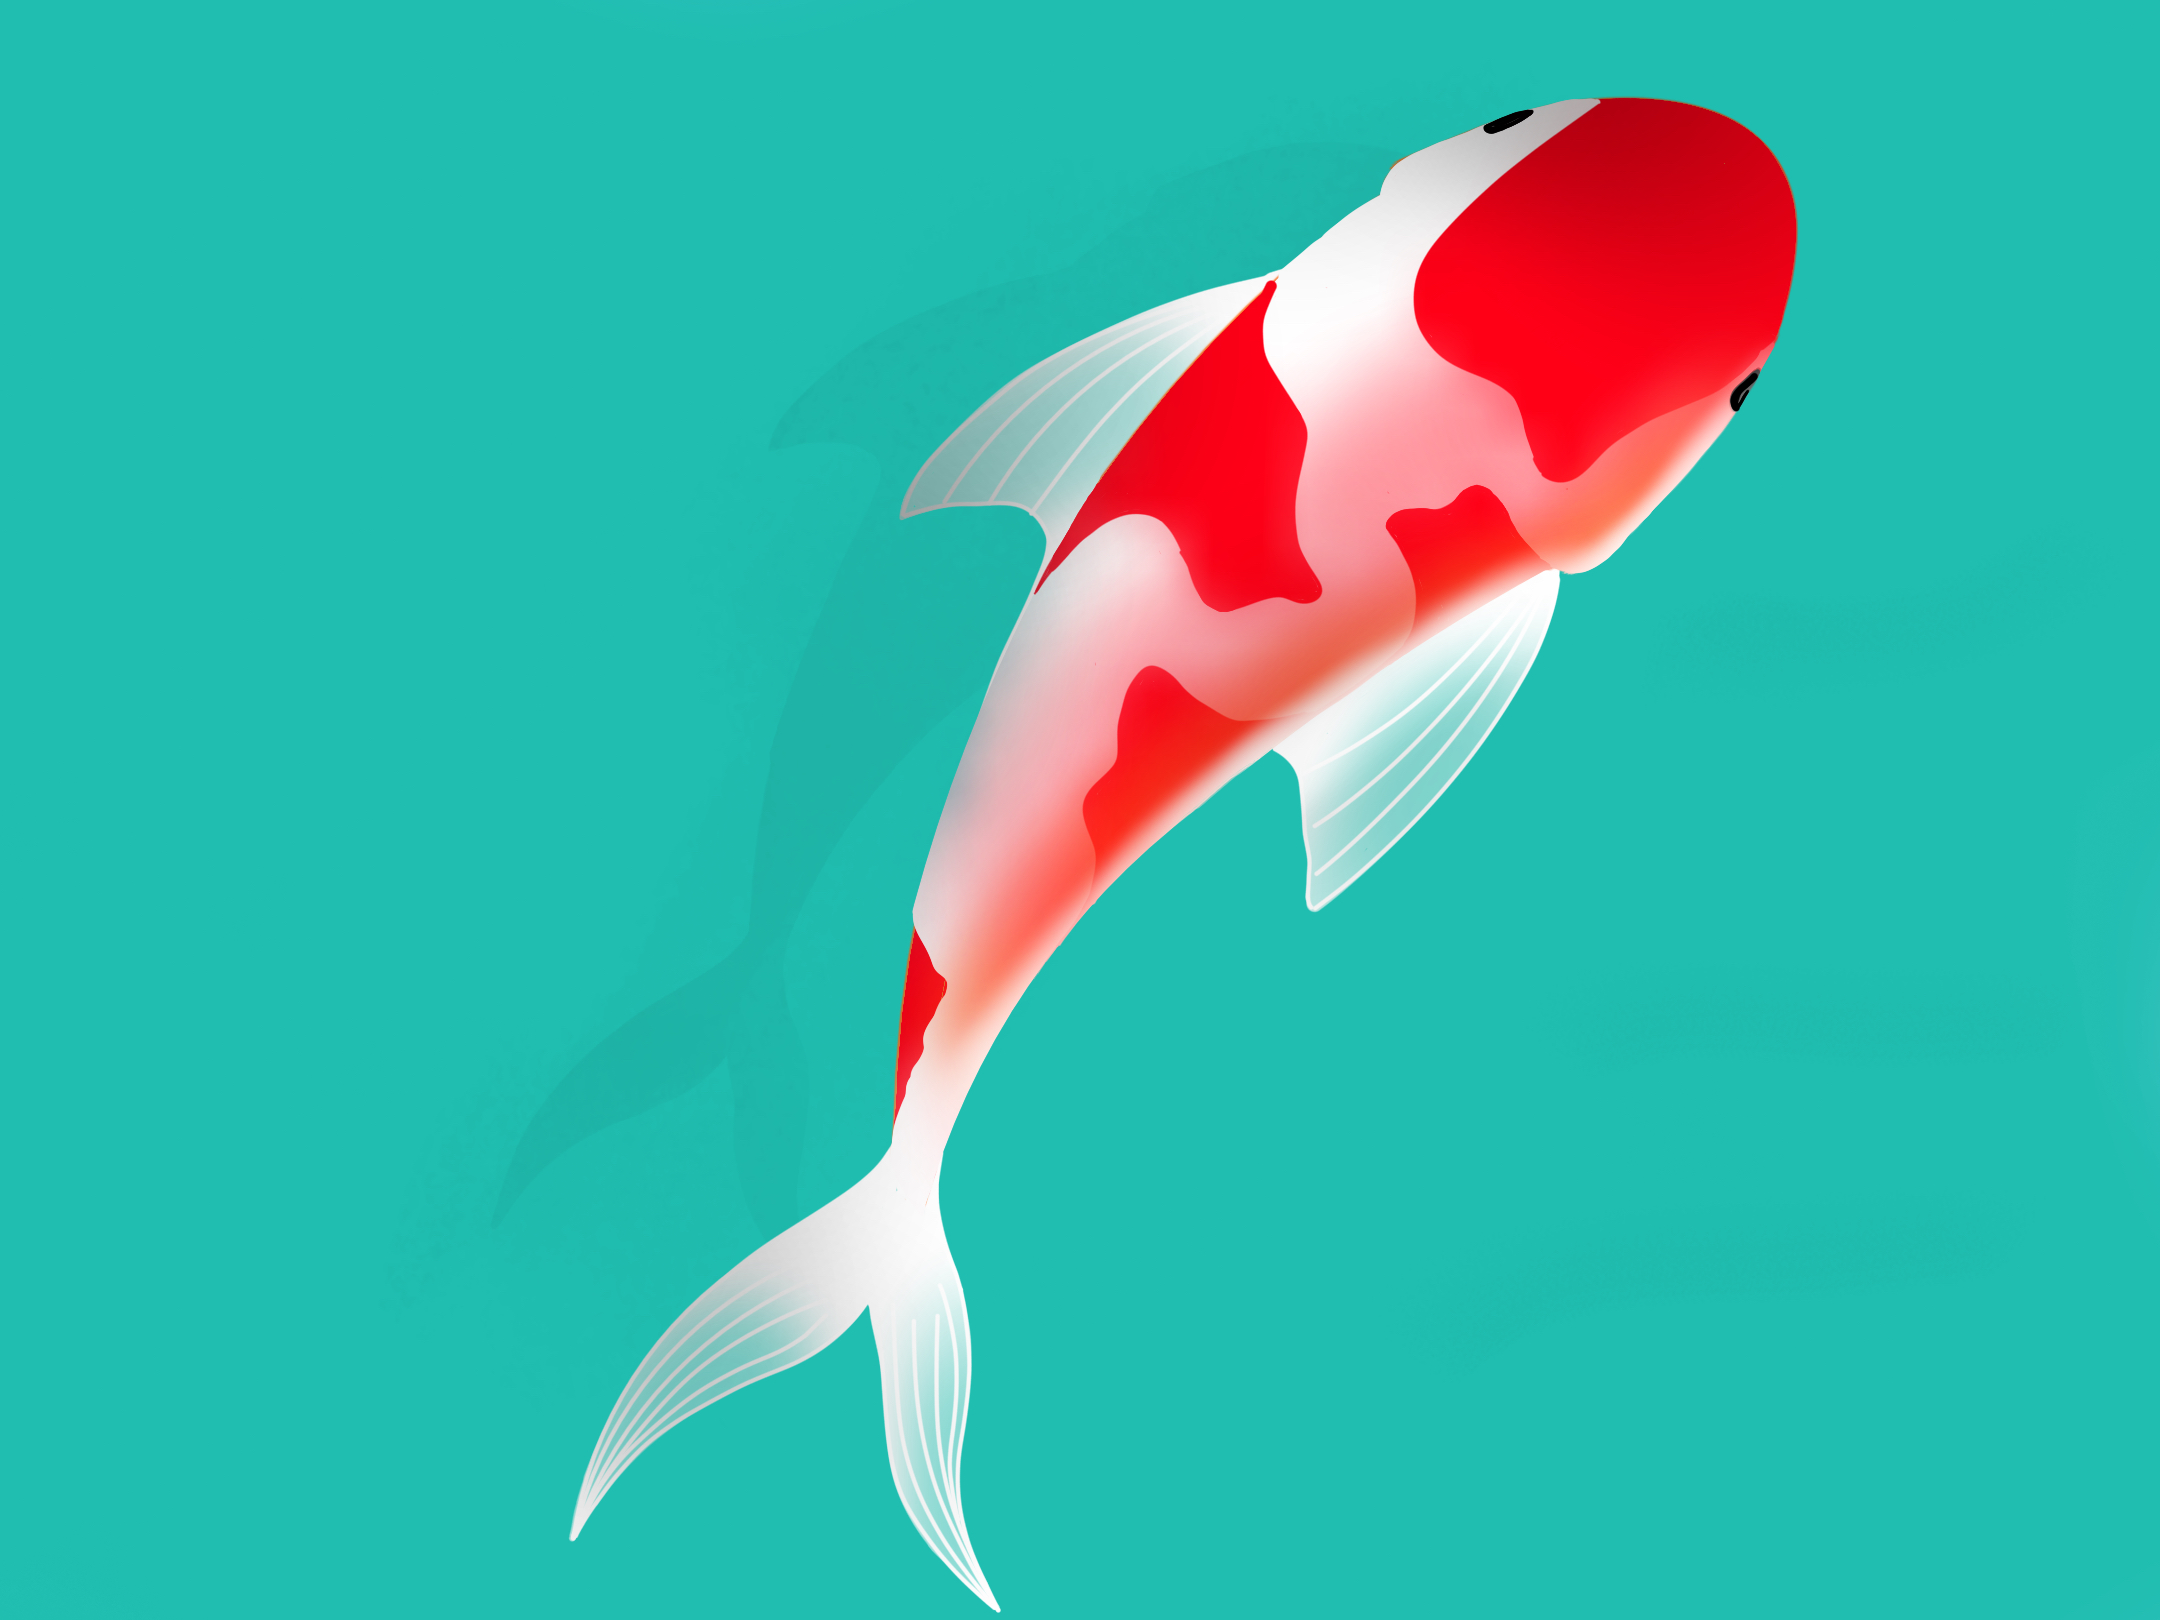 A fish illustration